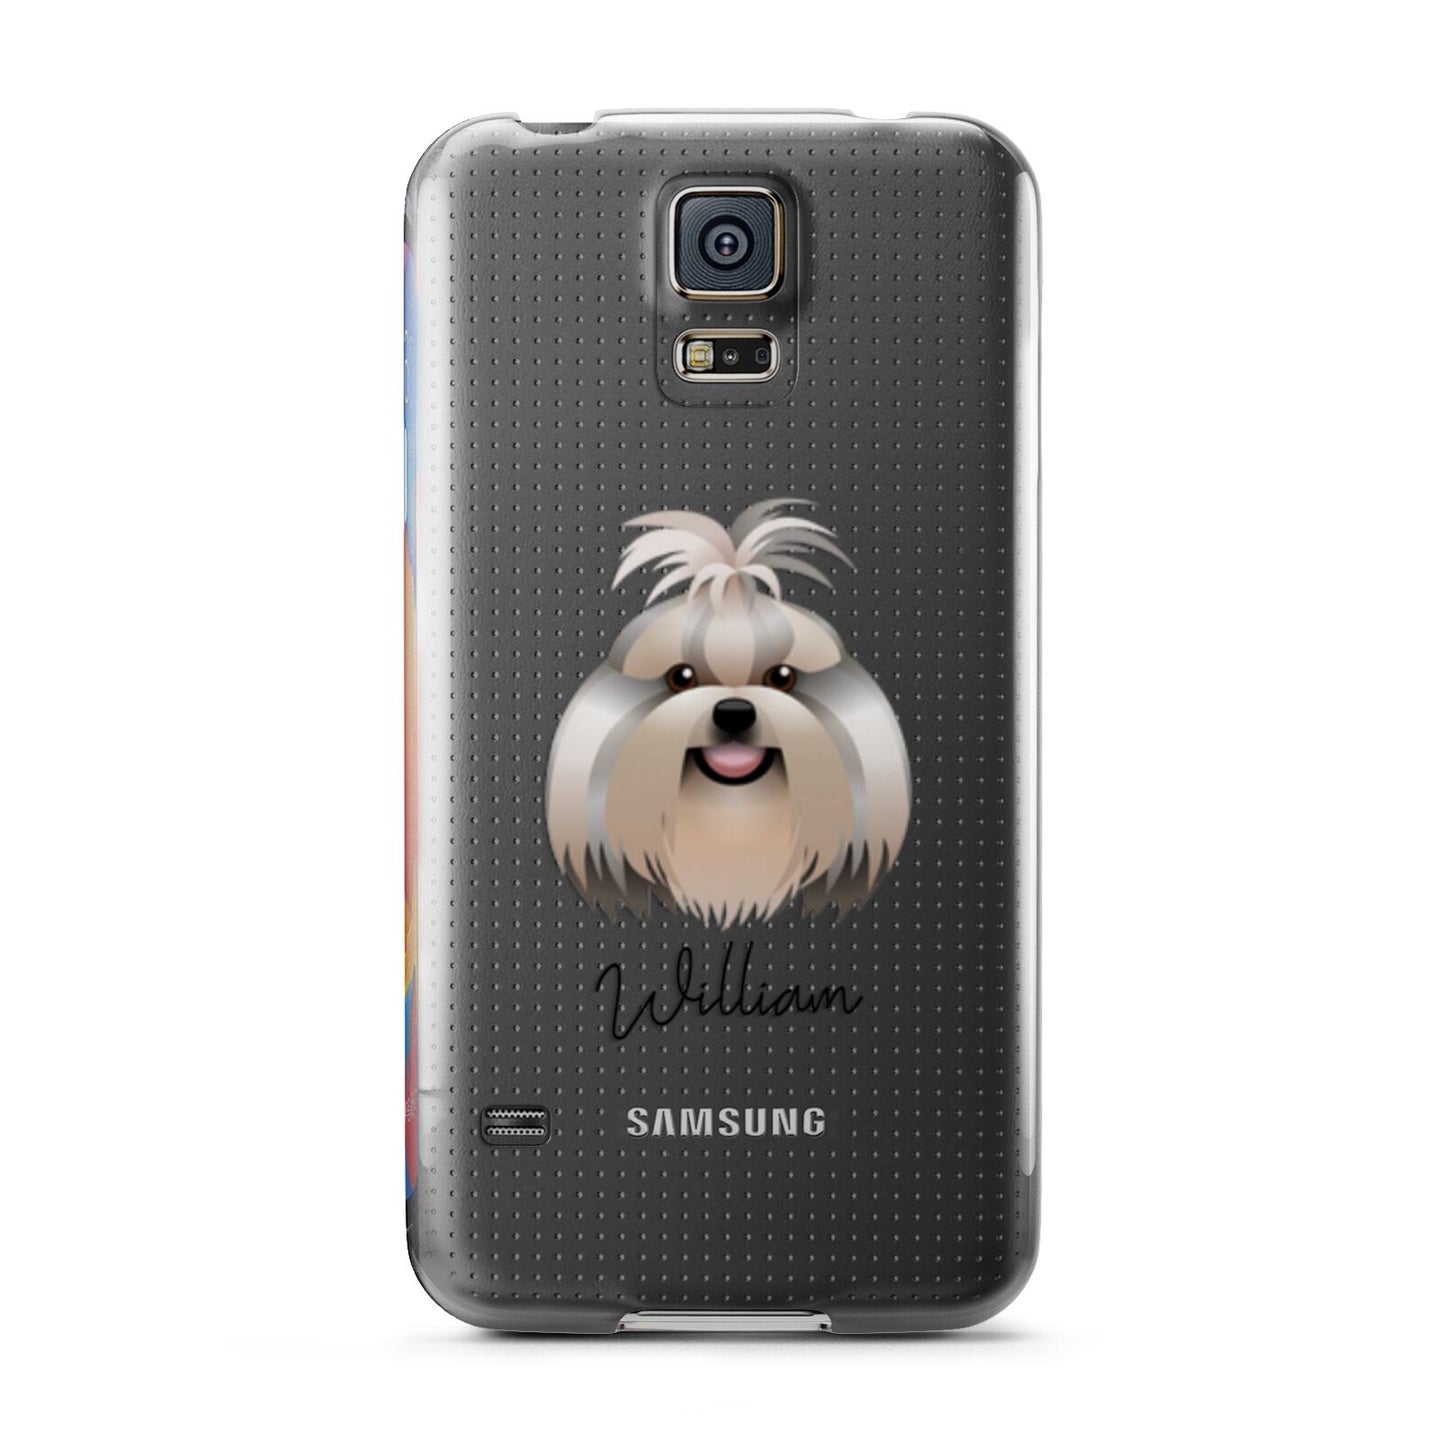 Shih Tzu Personalised Samsung Galaxy S5 Case